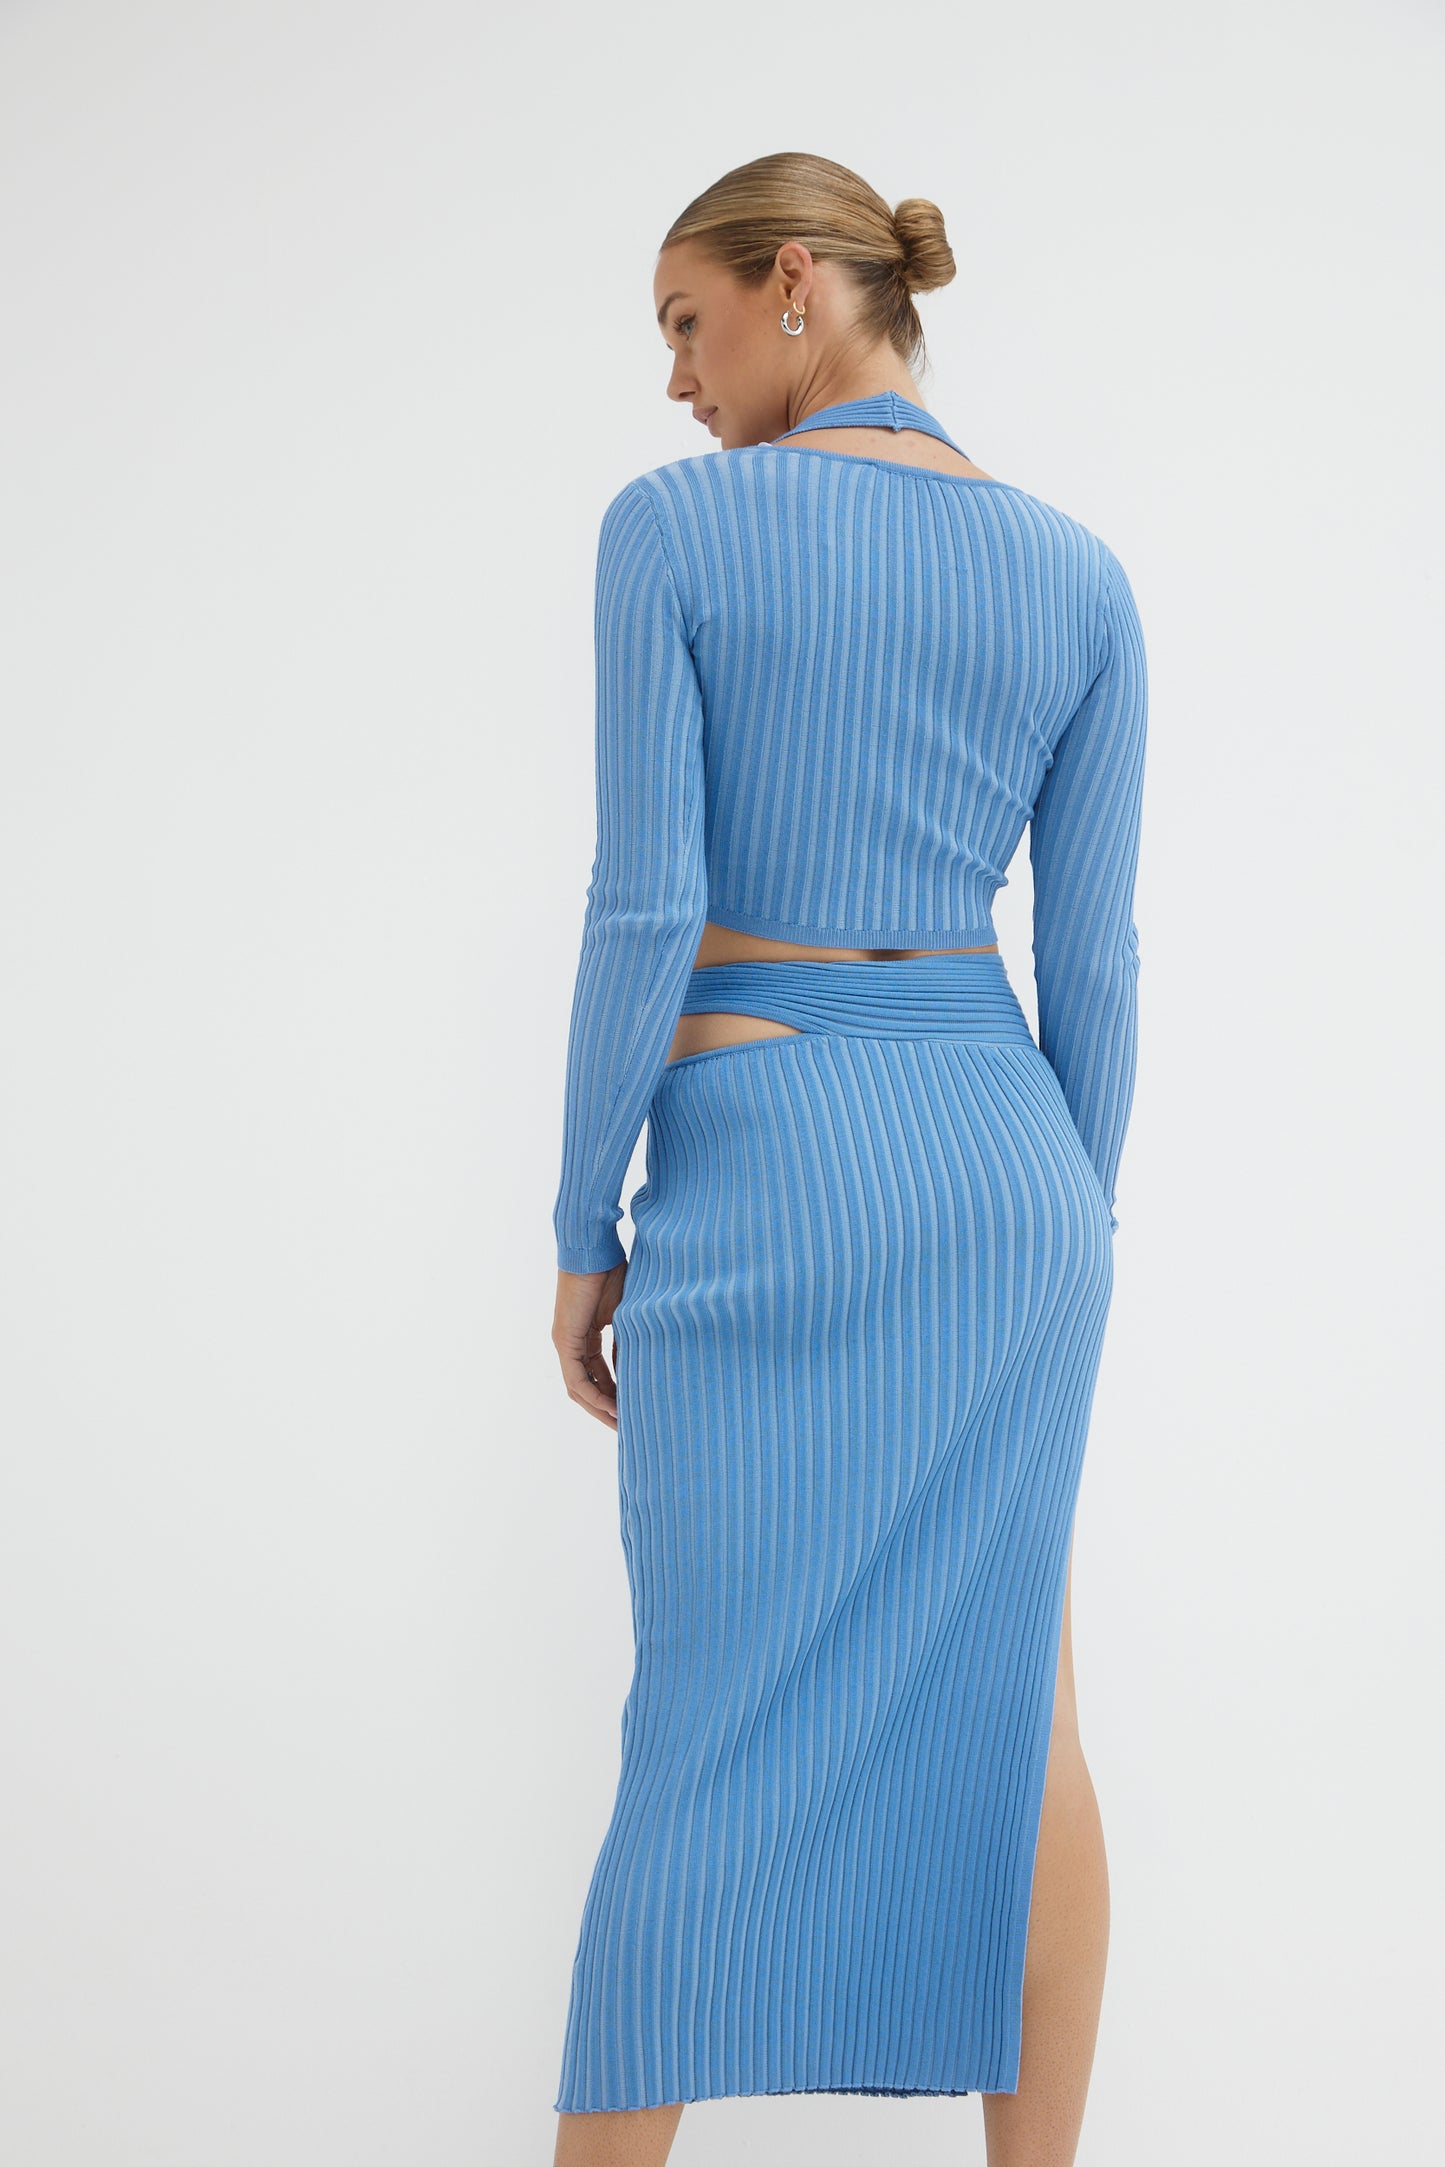 
                  
                    Sovere Studio women's Clothing Sydney Intwine knit Skirt Blue
                  
                